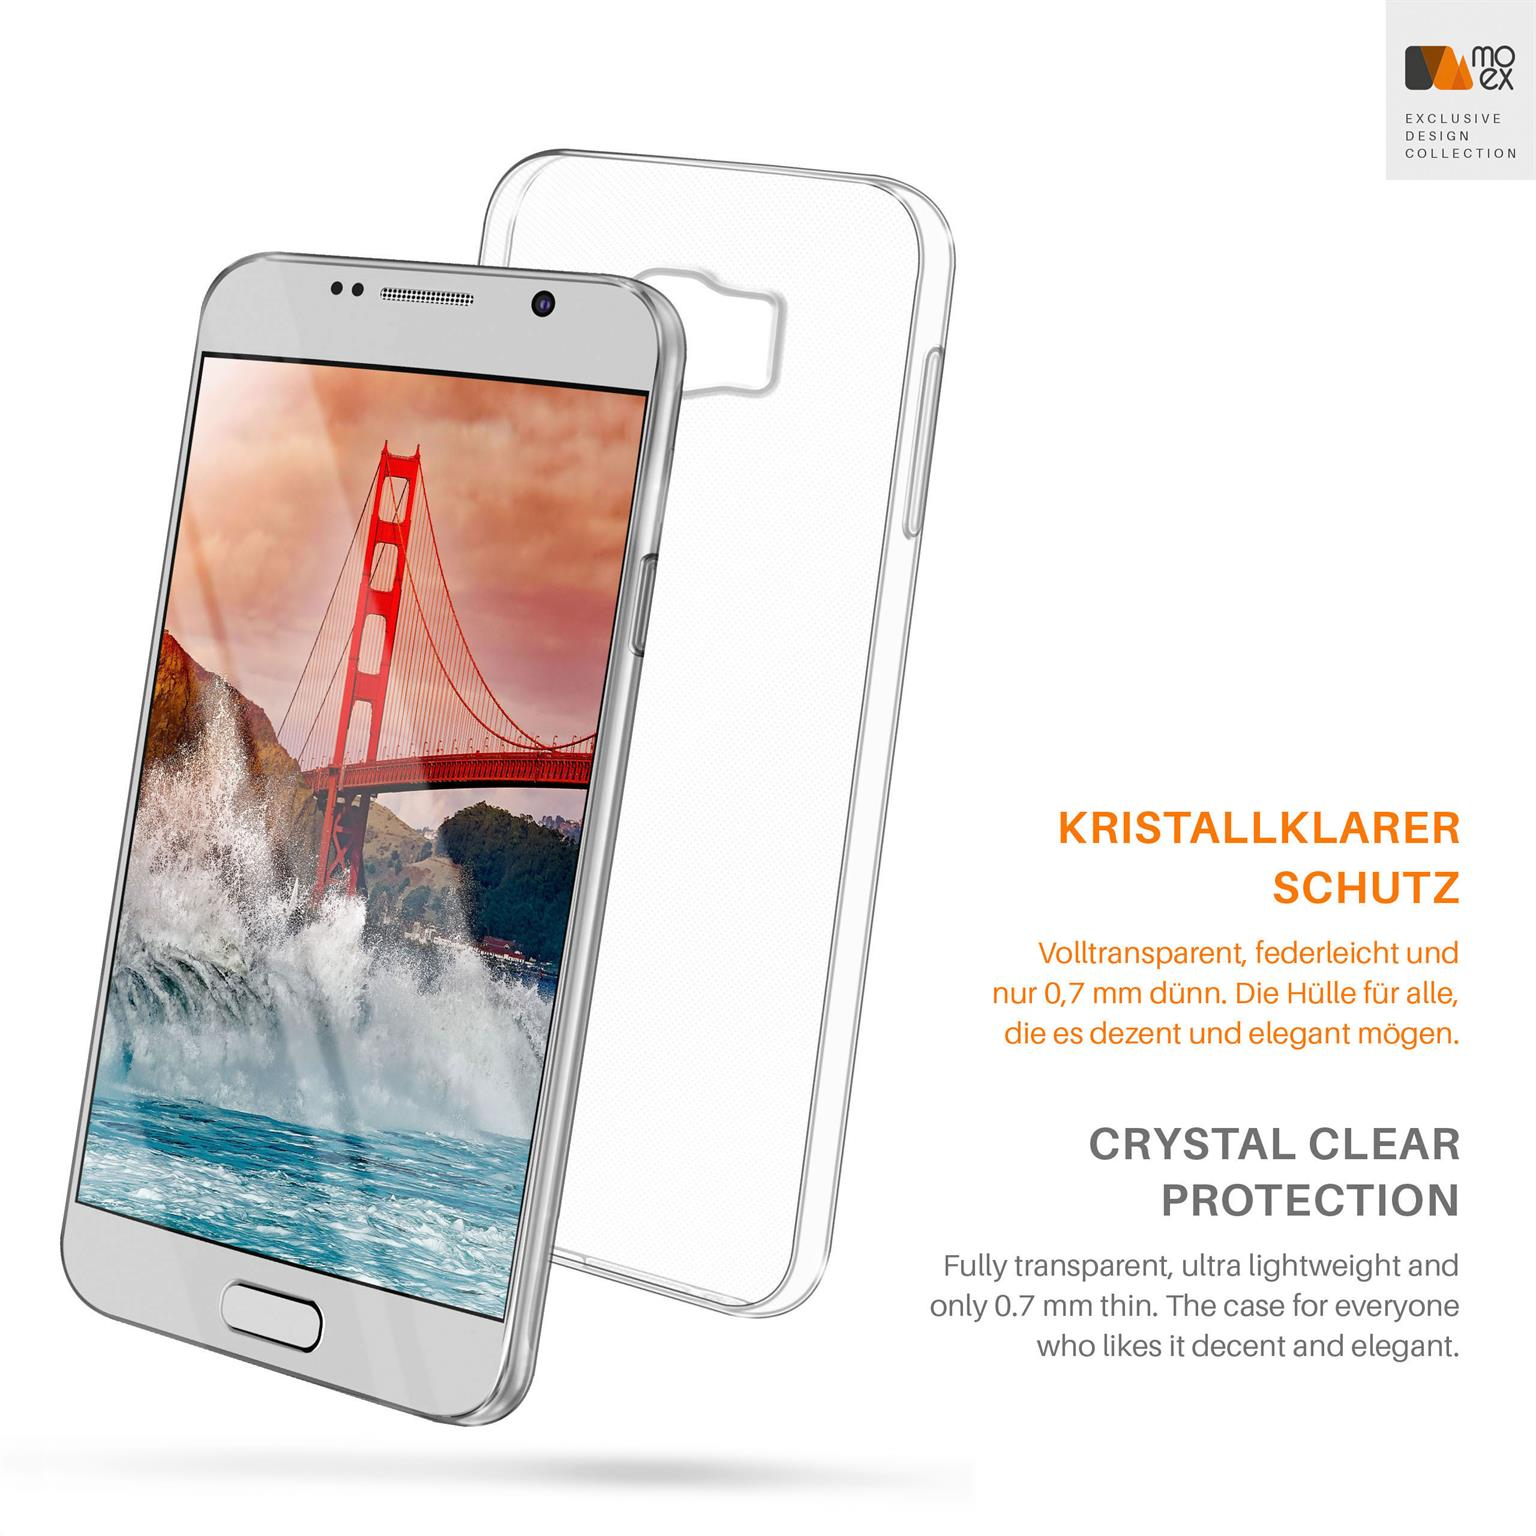 Aero S6, MOEX Case, Backcover, Galaxy Crystal-Clear Samsung,